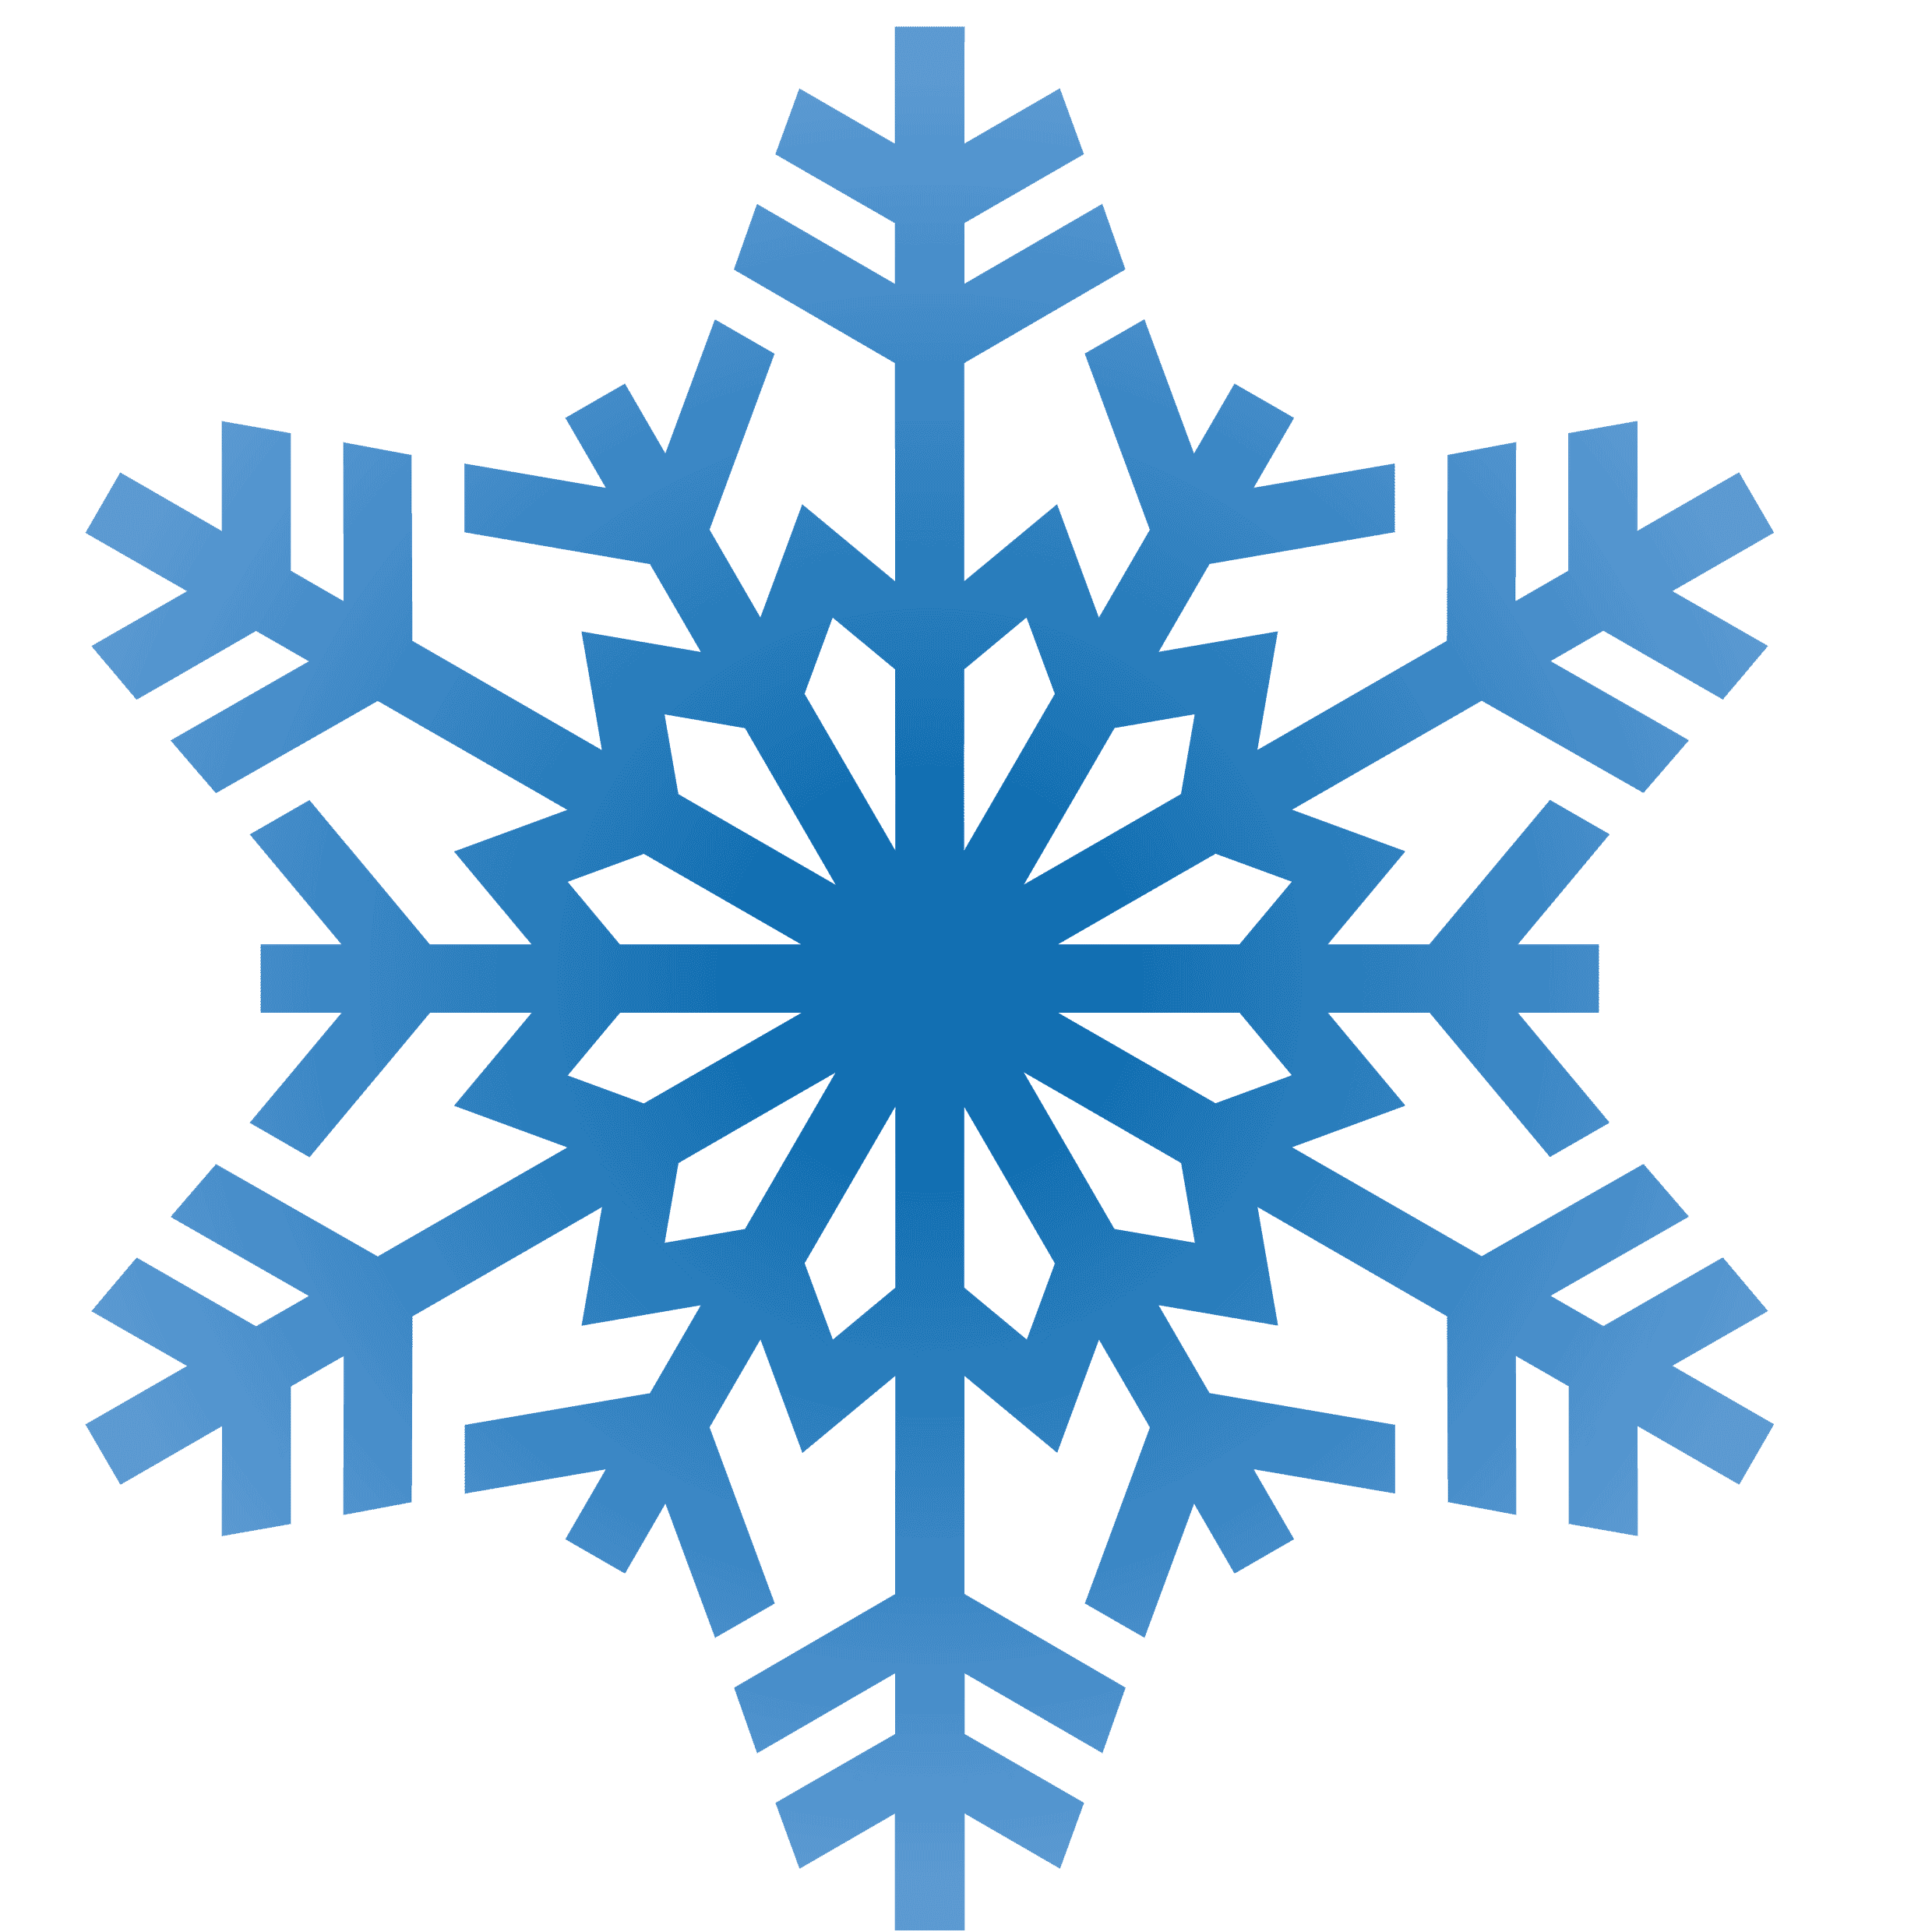 Frozen Snowflake Image PNG Image